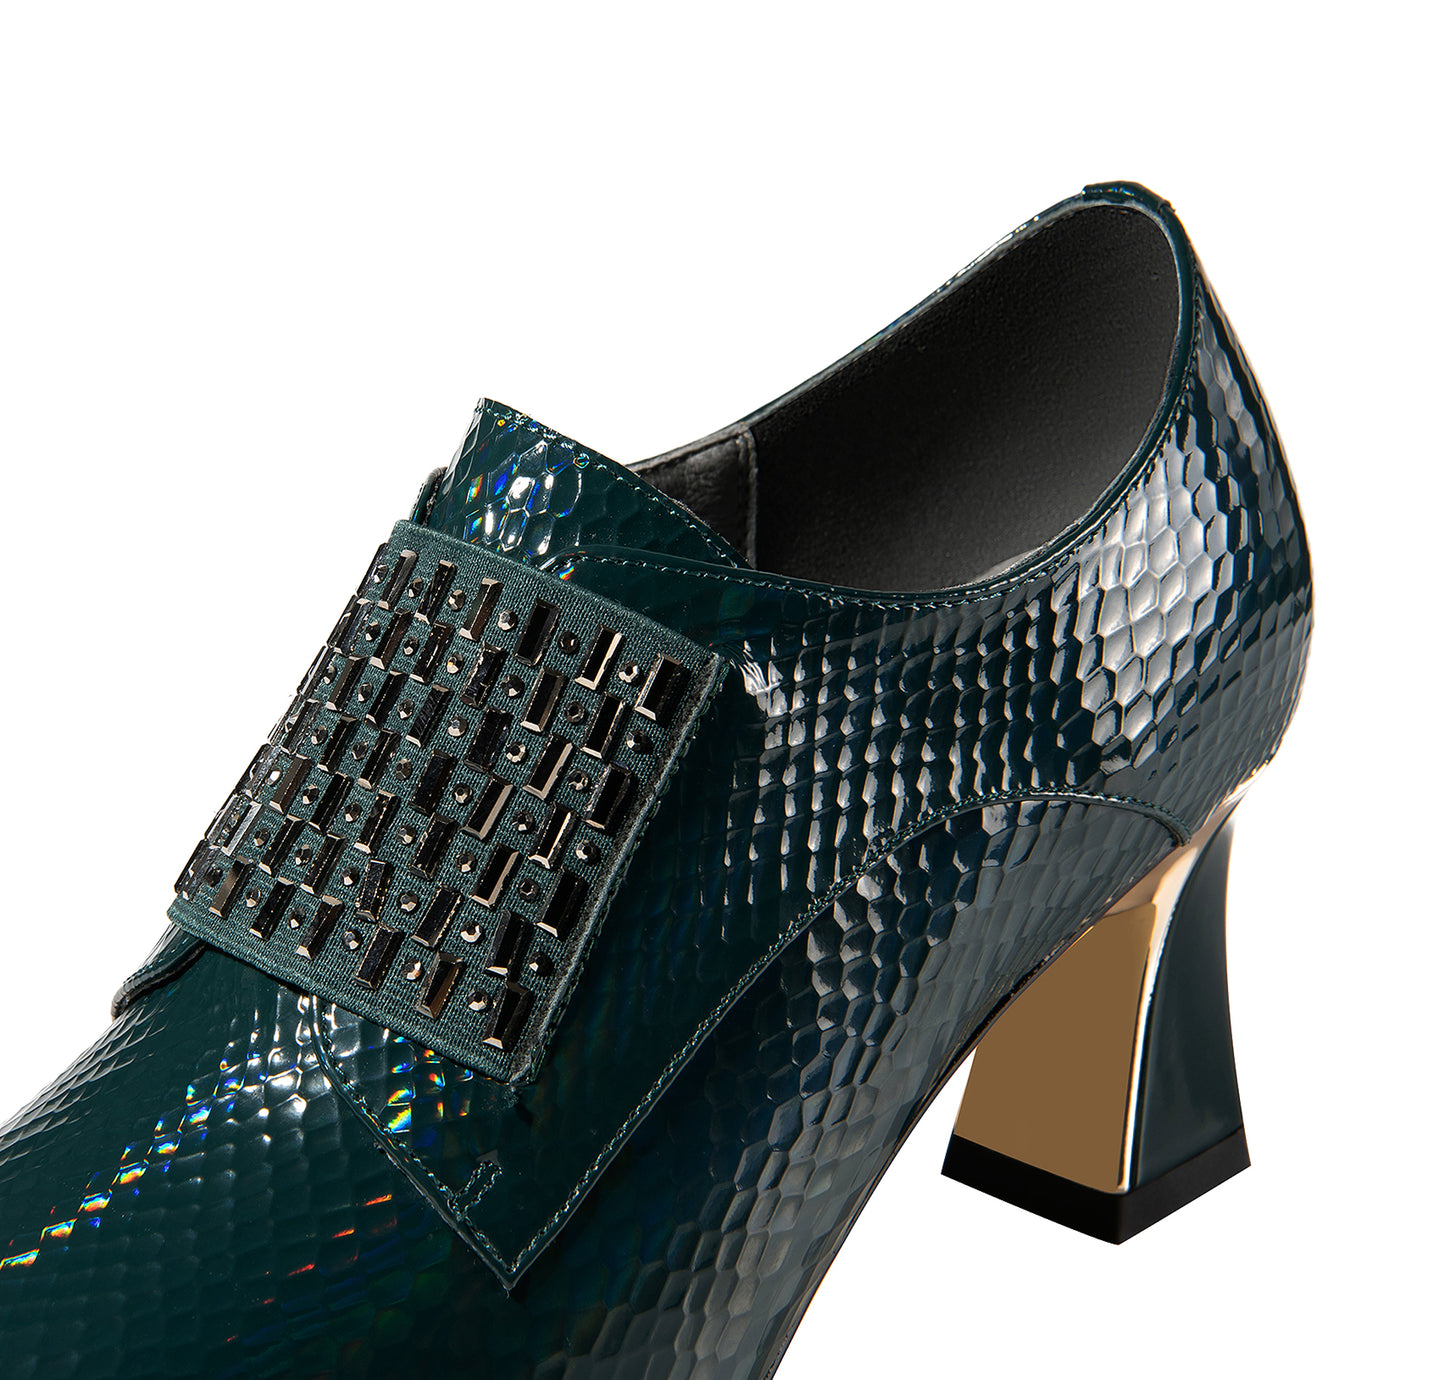 TinaCus Women's Genuine Leather Handmade Spool Heel Pointed Toe Slip On Stylish Oxford Pumps